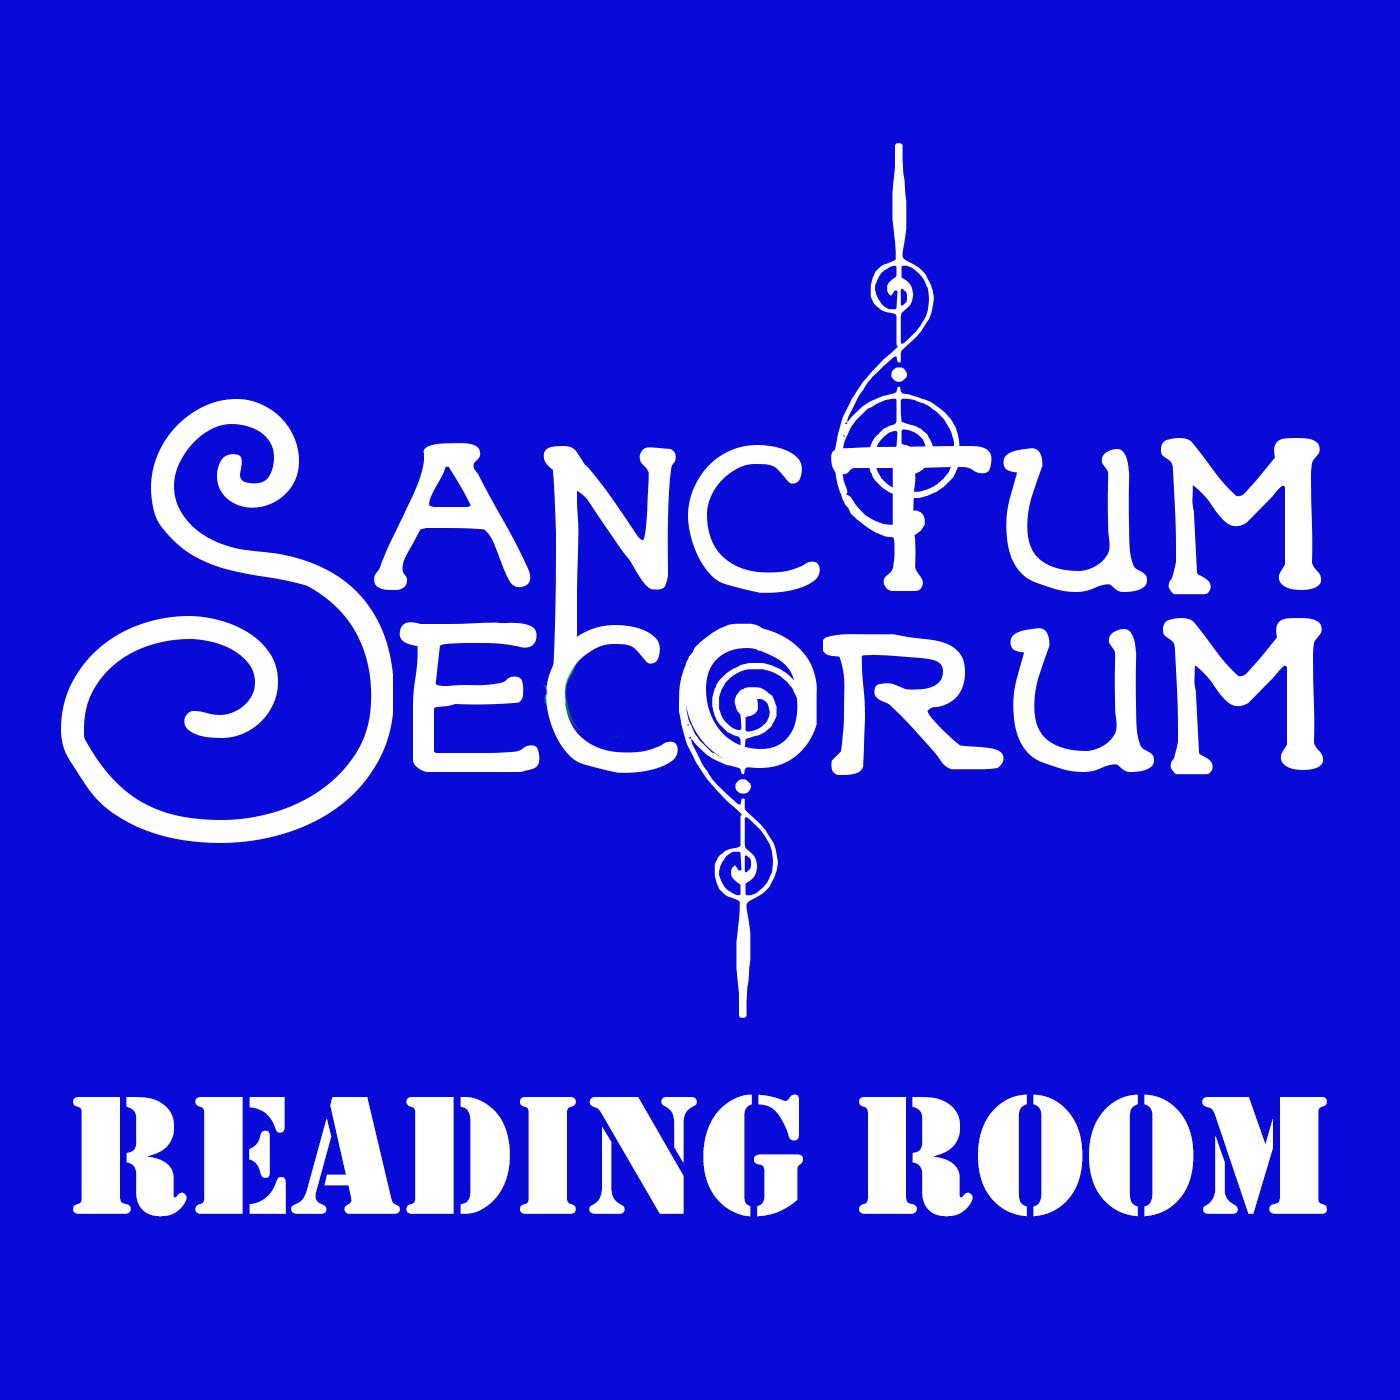 Sanctum Secorum Reading Room #08 - The Blazing World